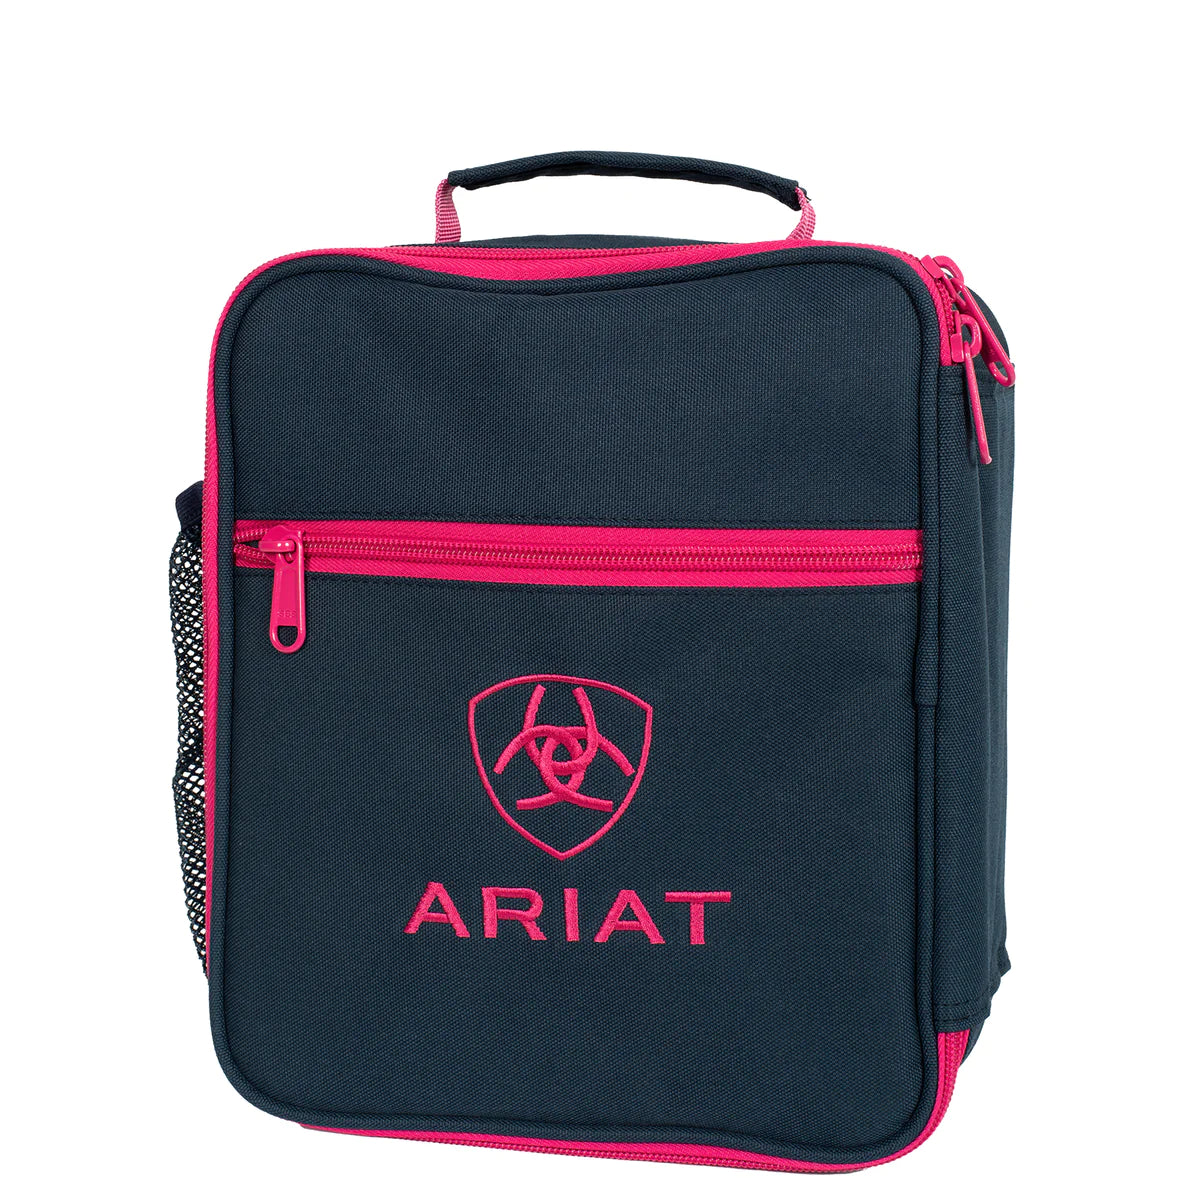 Ariat Lunch Box - Pink/Navy